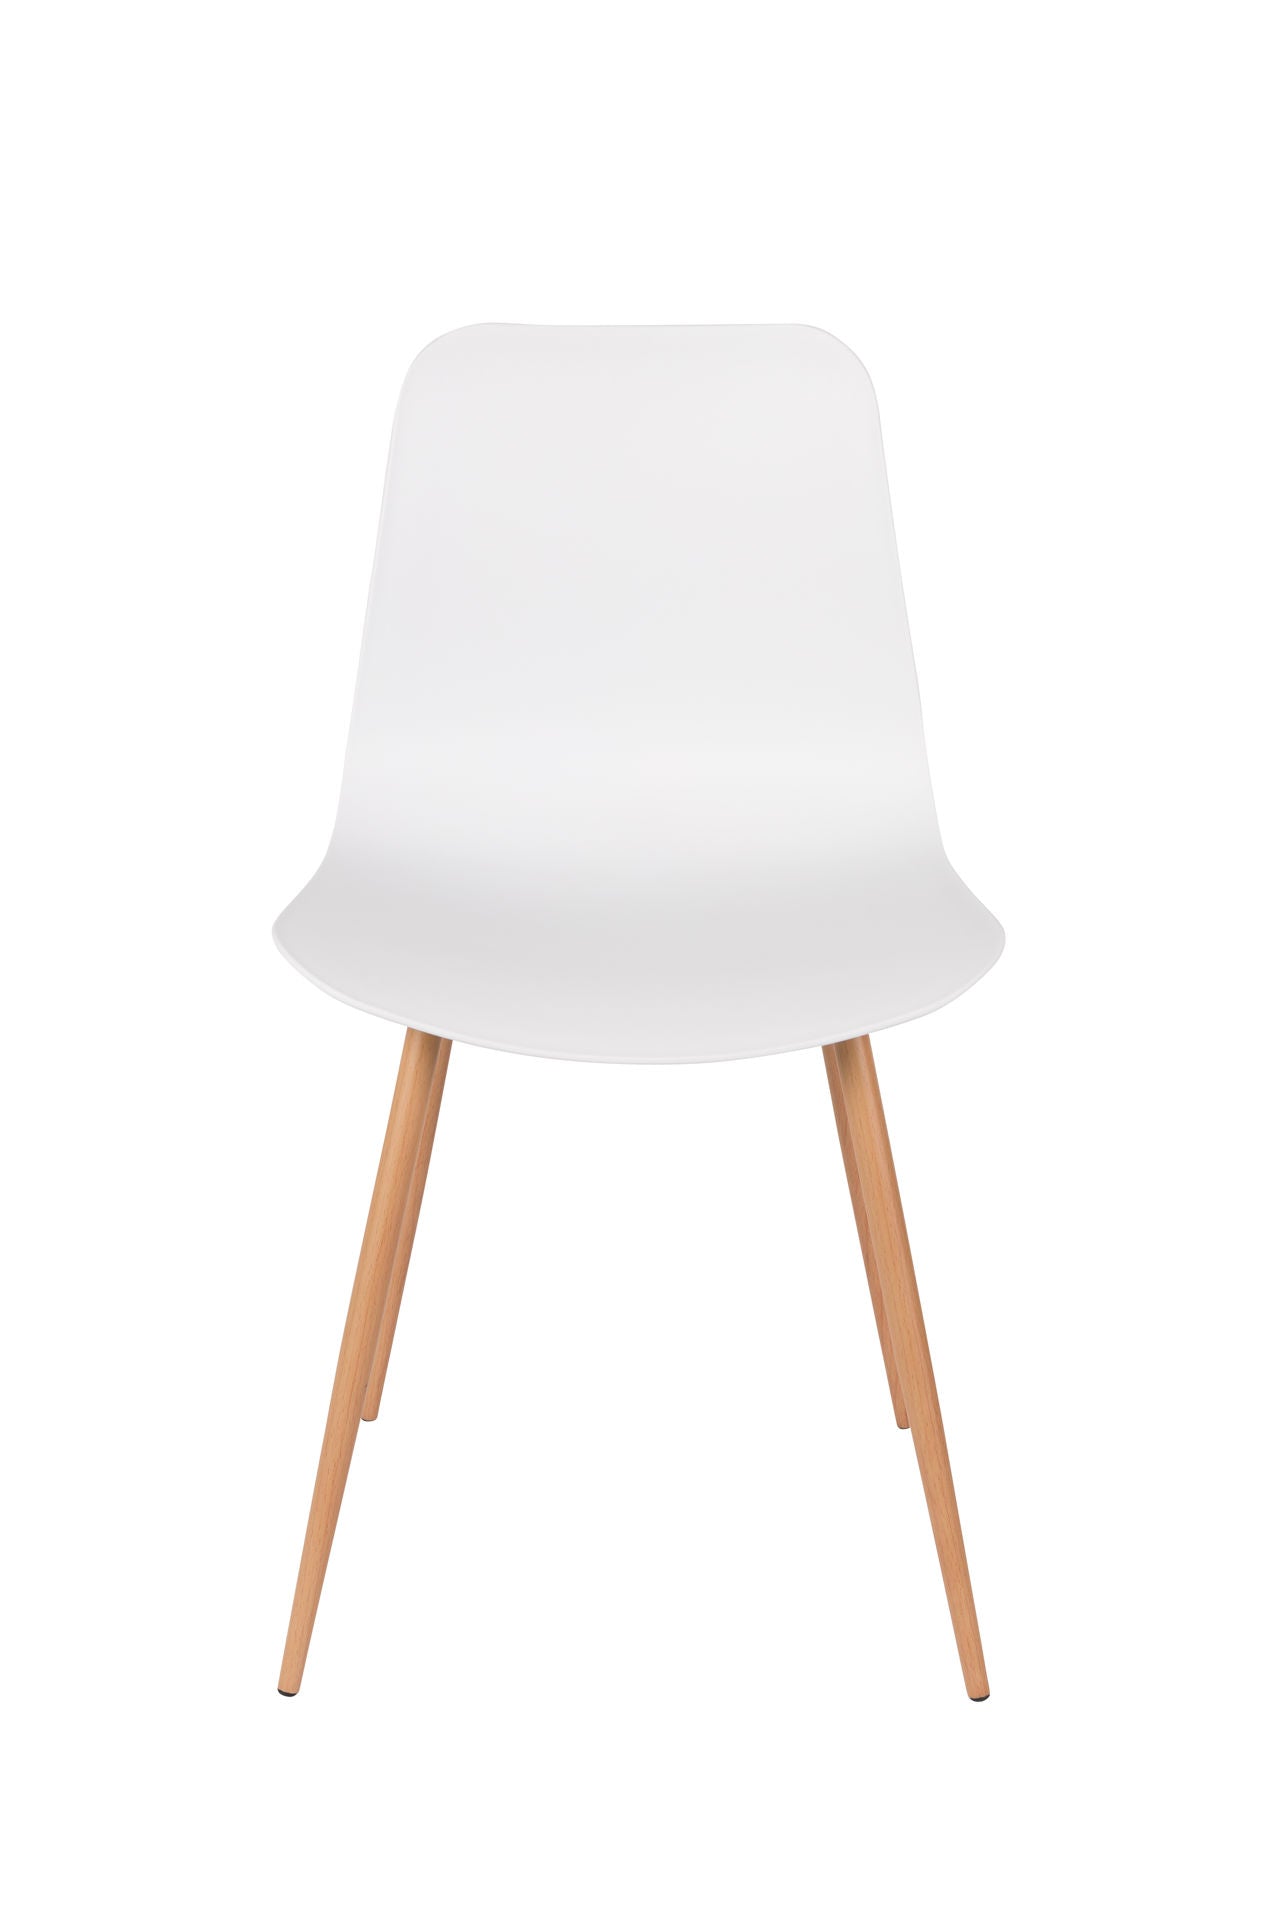 Nancy's Frankfort Square Chair - Scandinavisch - Wit, Bruin - Polypryleen, IJzer, Hout - 49 cm x 44,5 cm x 80 cm